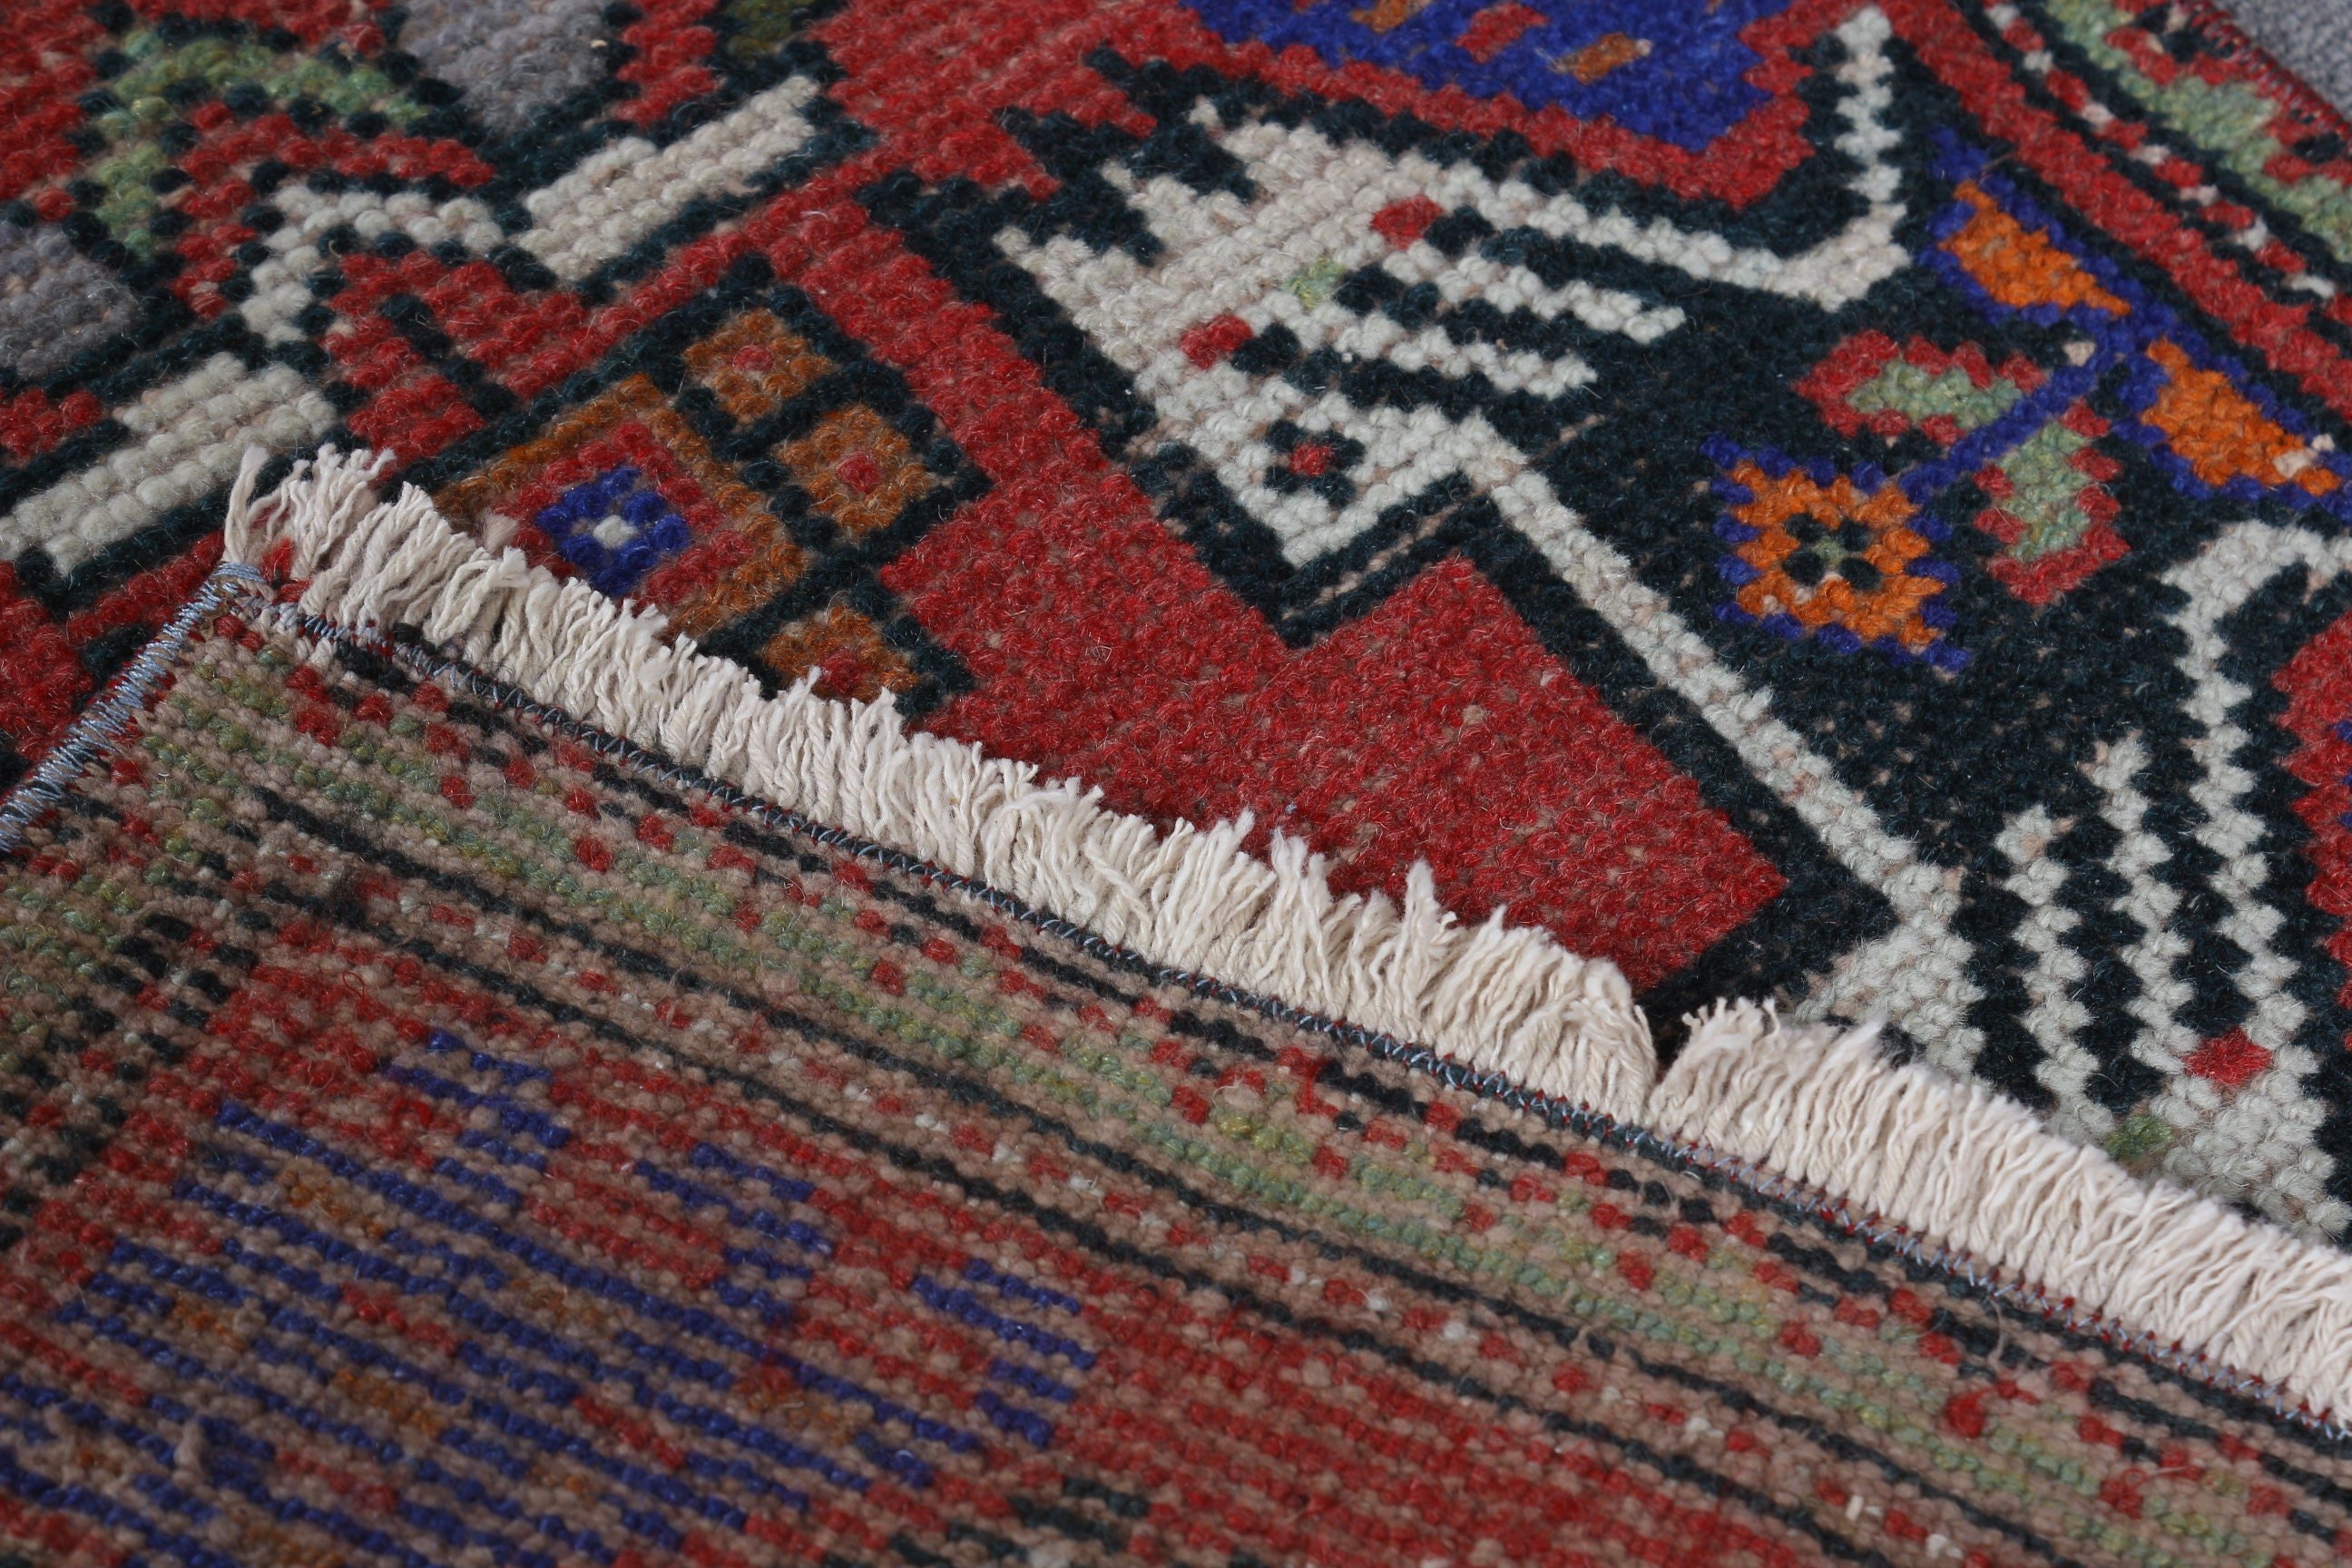 Floor Rug, 1.6x3.3 ft Small Rugs, Red Antique Rugs, Vintage Rug, Door Mat Rugs, Wall Hanging Rug, Turkish Rug, Antique Rugs